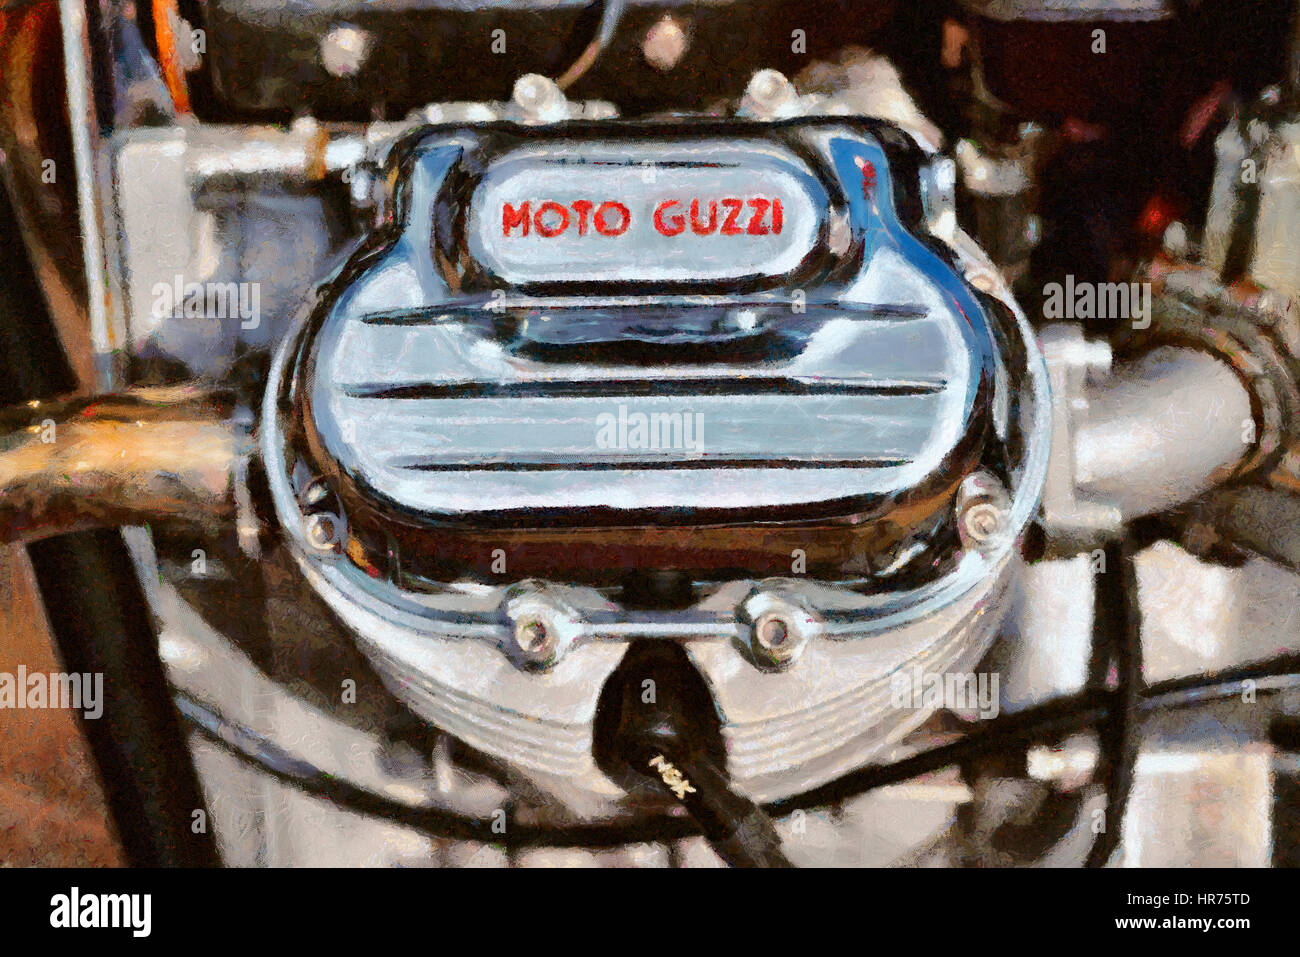 1972 Moto Guzzi V7 cylinder head Stock Photo